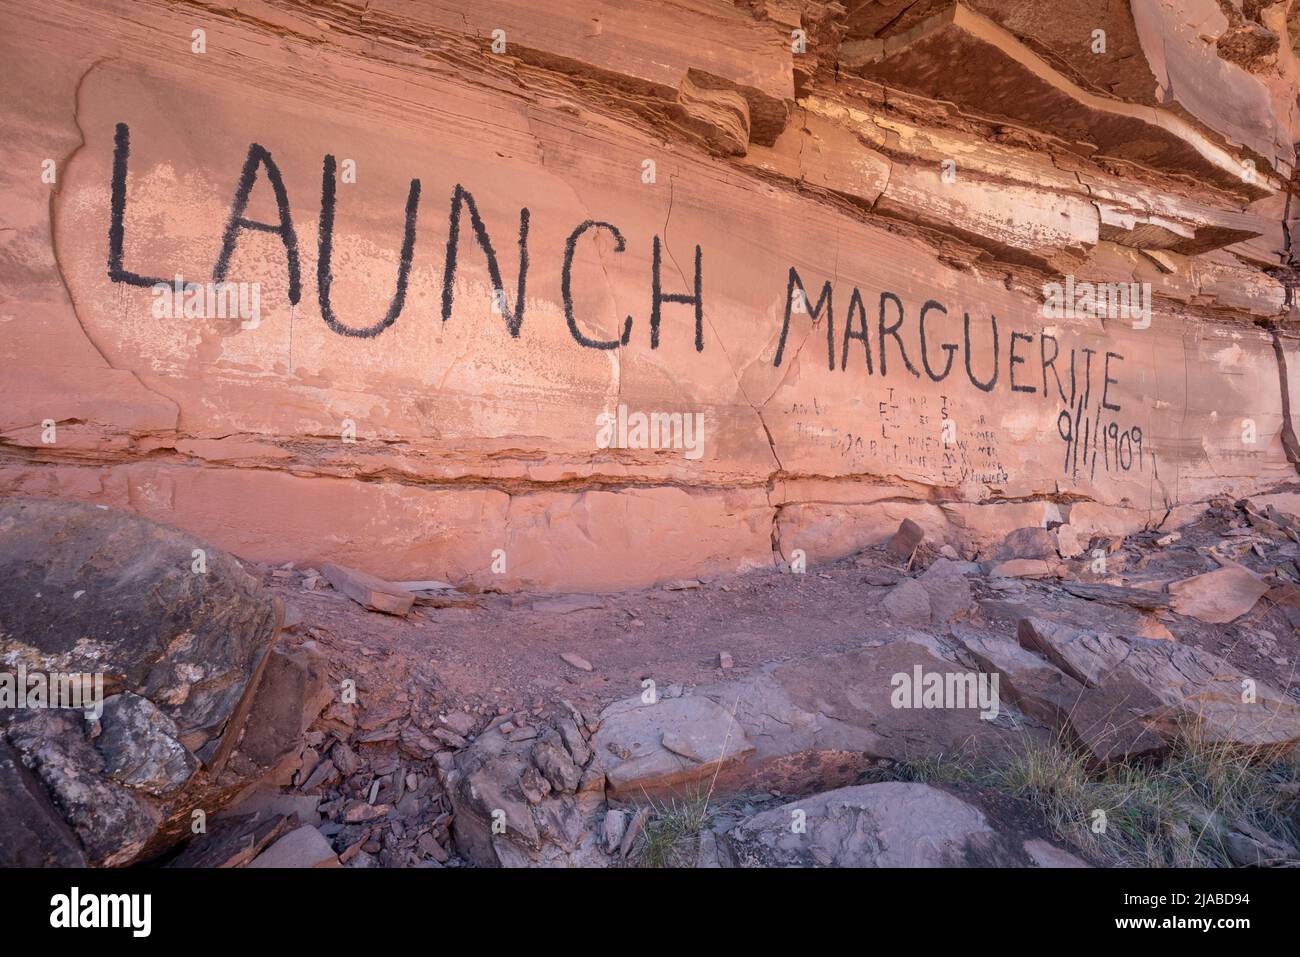 Launch Marguerite inscription along the Green River, Utah. Stock Photo